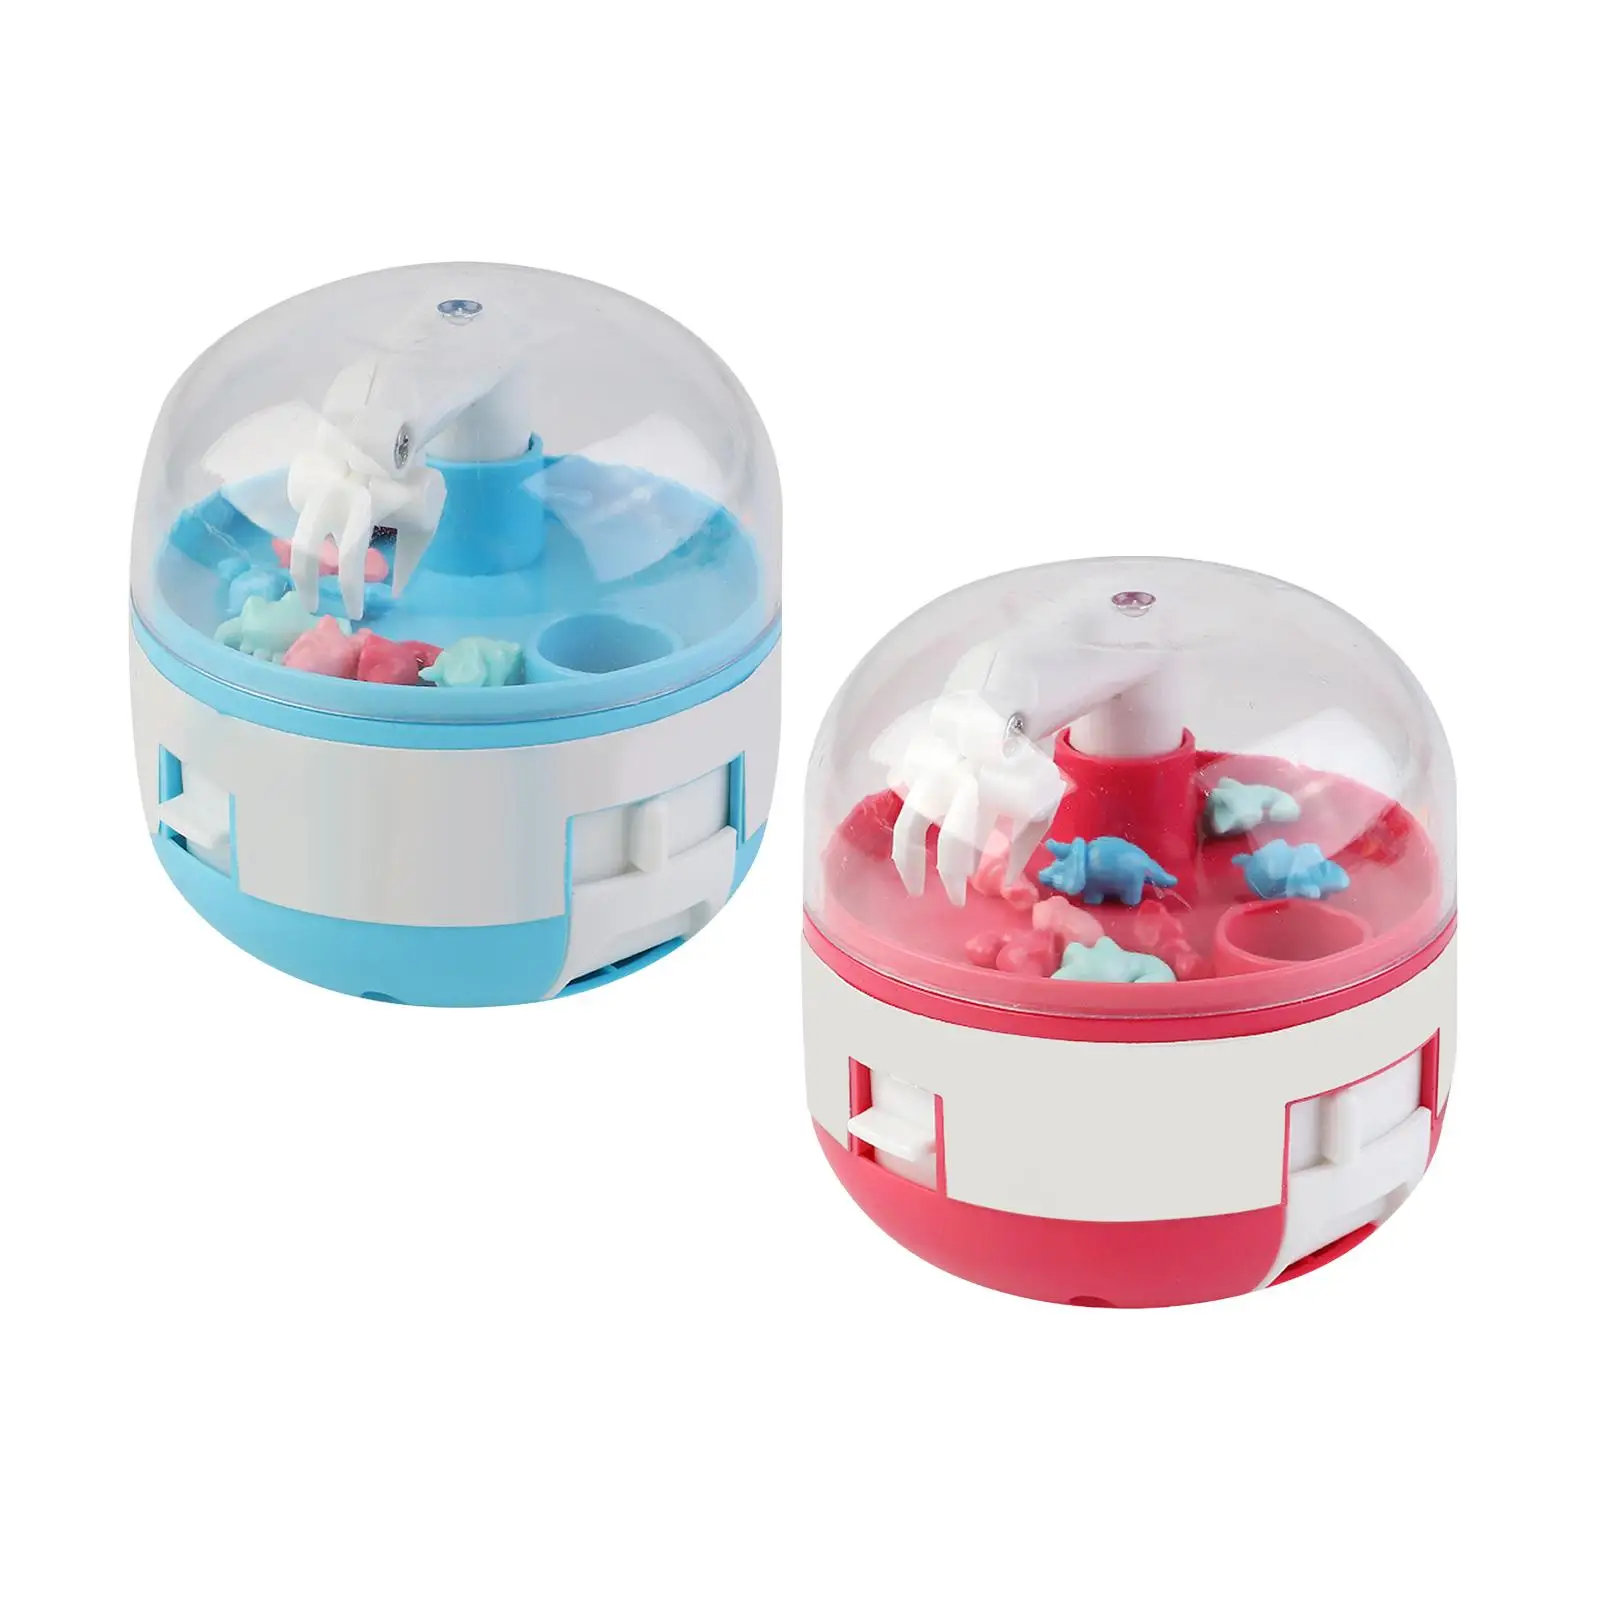 Machine Miniature Grabber Fingertip Toys for Birthday Party Kids